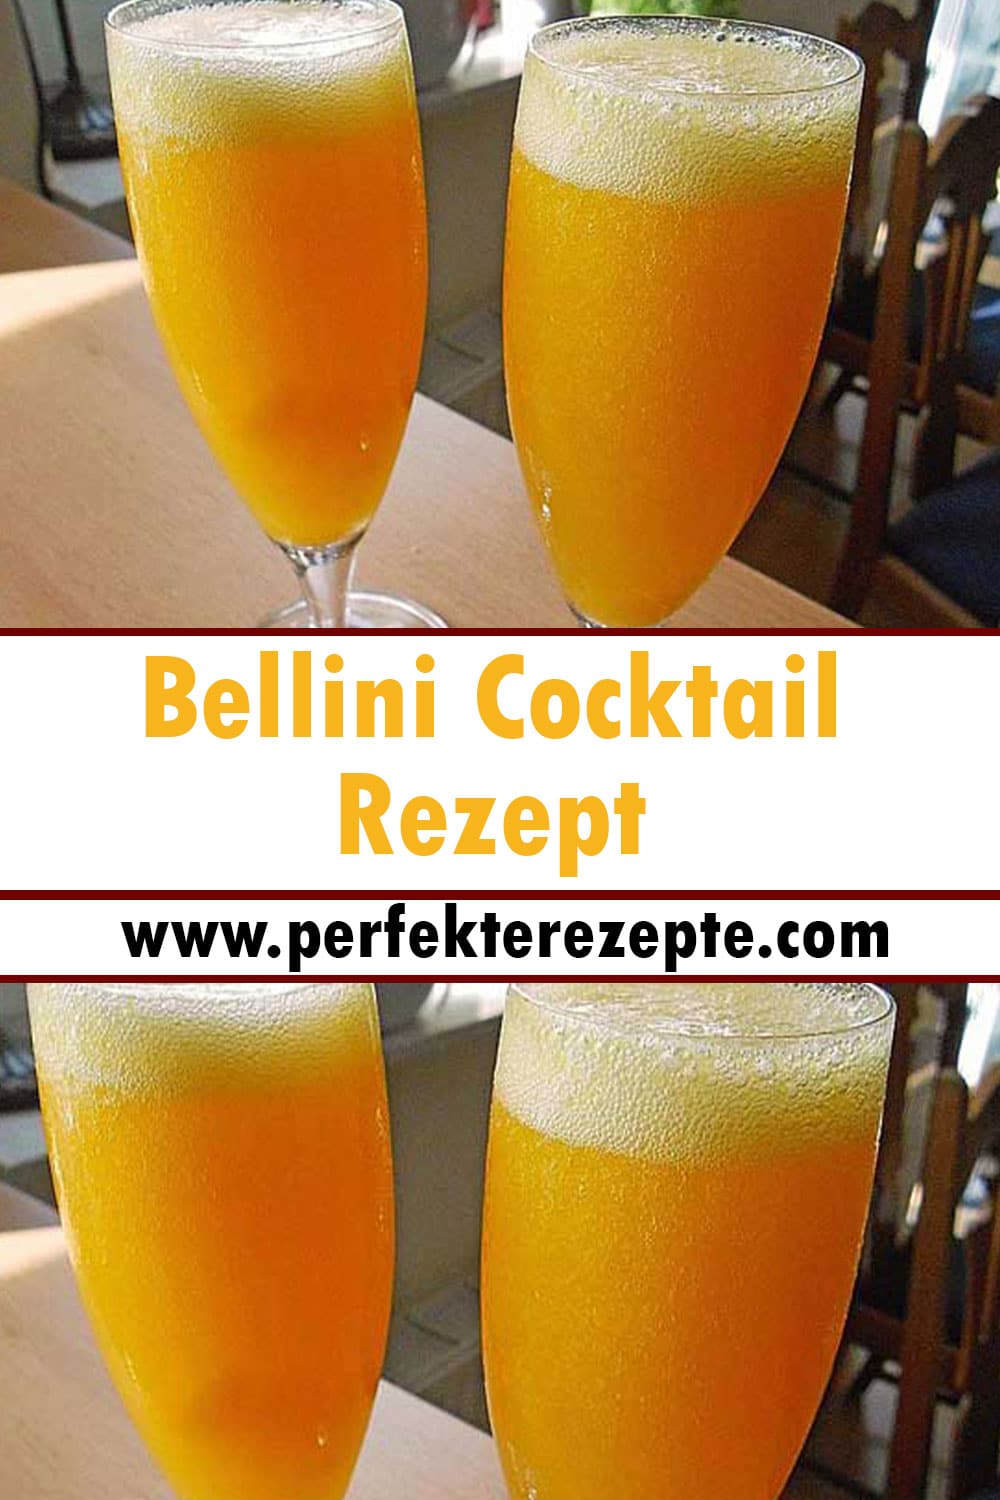 Bellini Cocktail Rezept